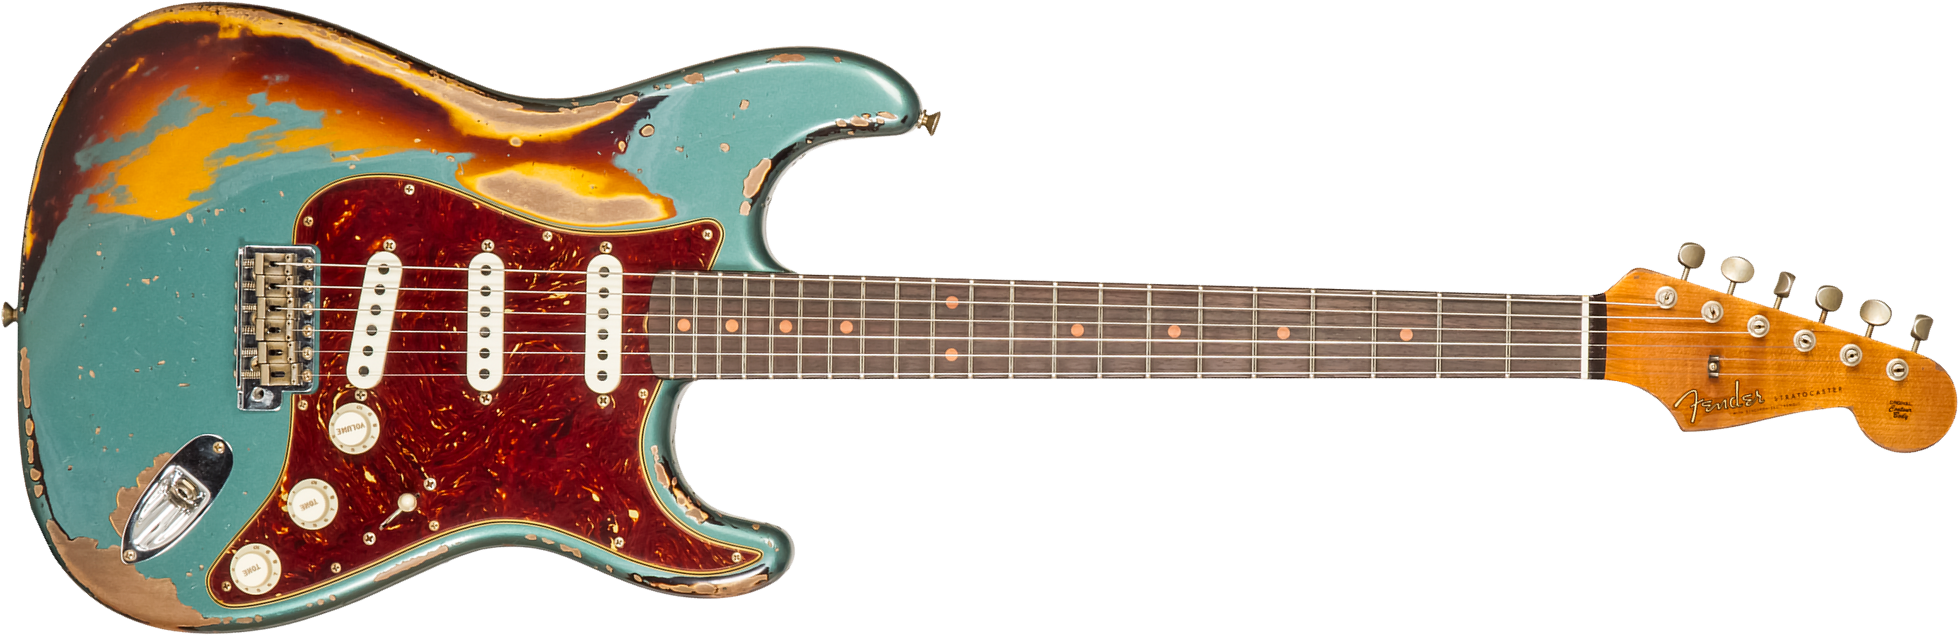 Fender Custom Shop Strat 1961 3s Trem Rw #cz573502 - Super Heavy Relic Sherwood Green Metallic O. 3-cs - Guitarra eléctrica con forma de str. - Main p